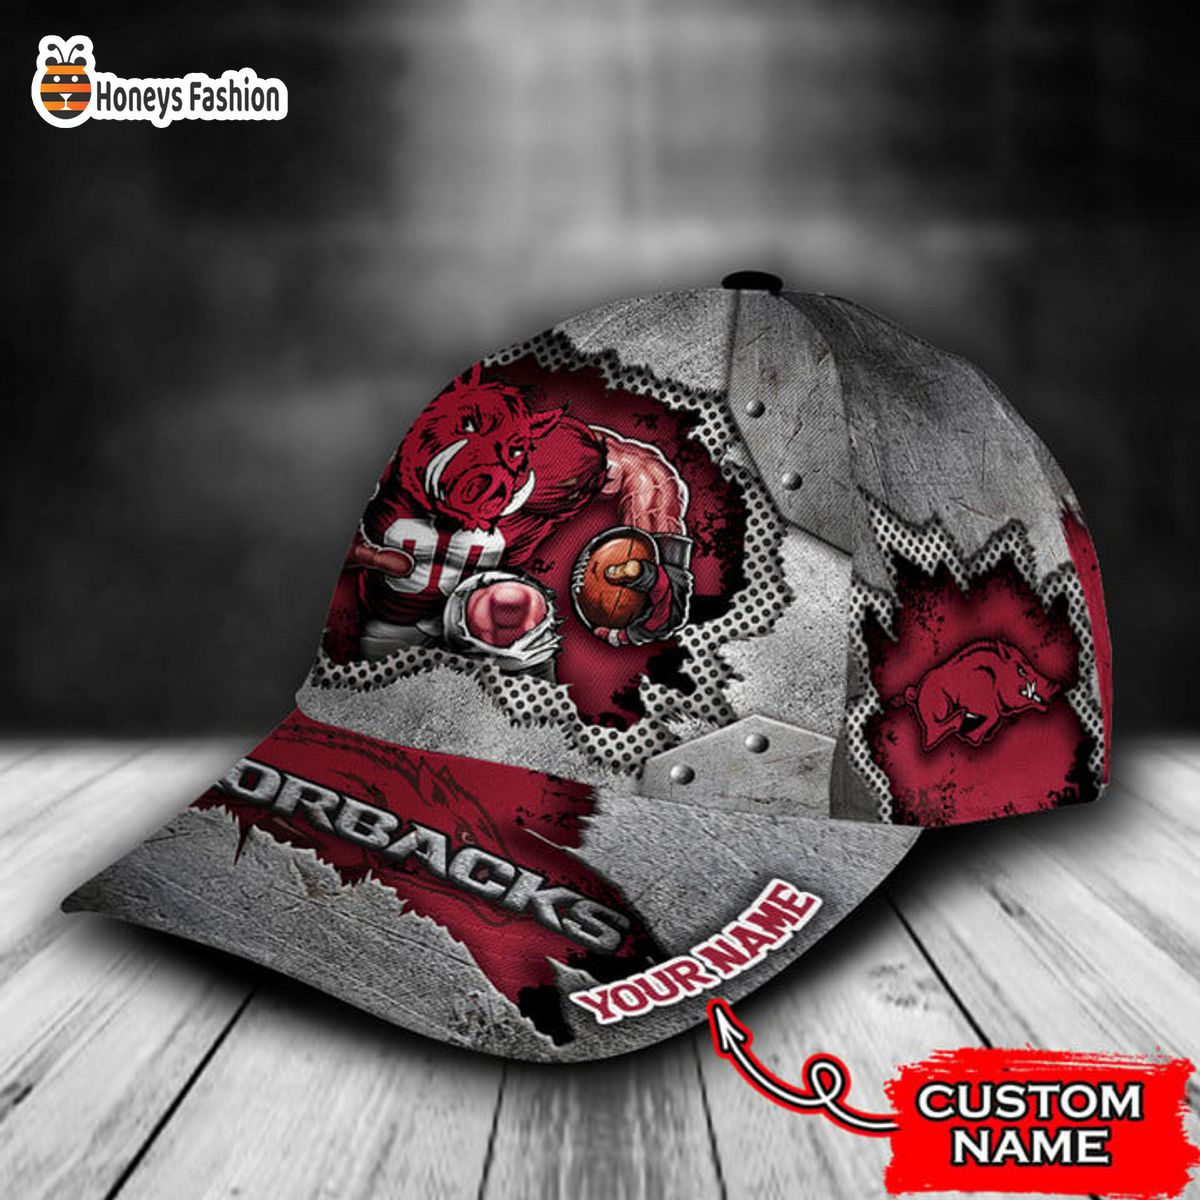 Arkansas razorbacks mascot custom name classic cap